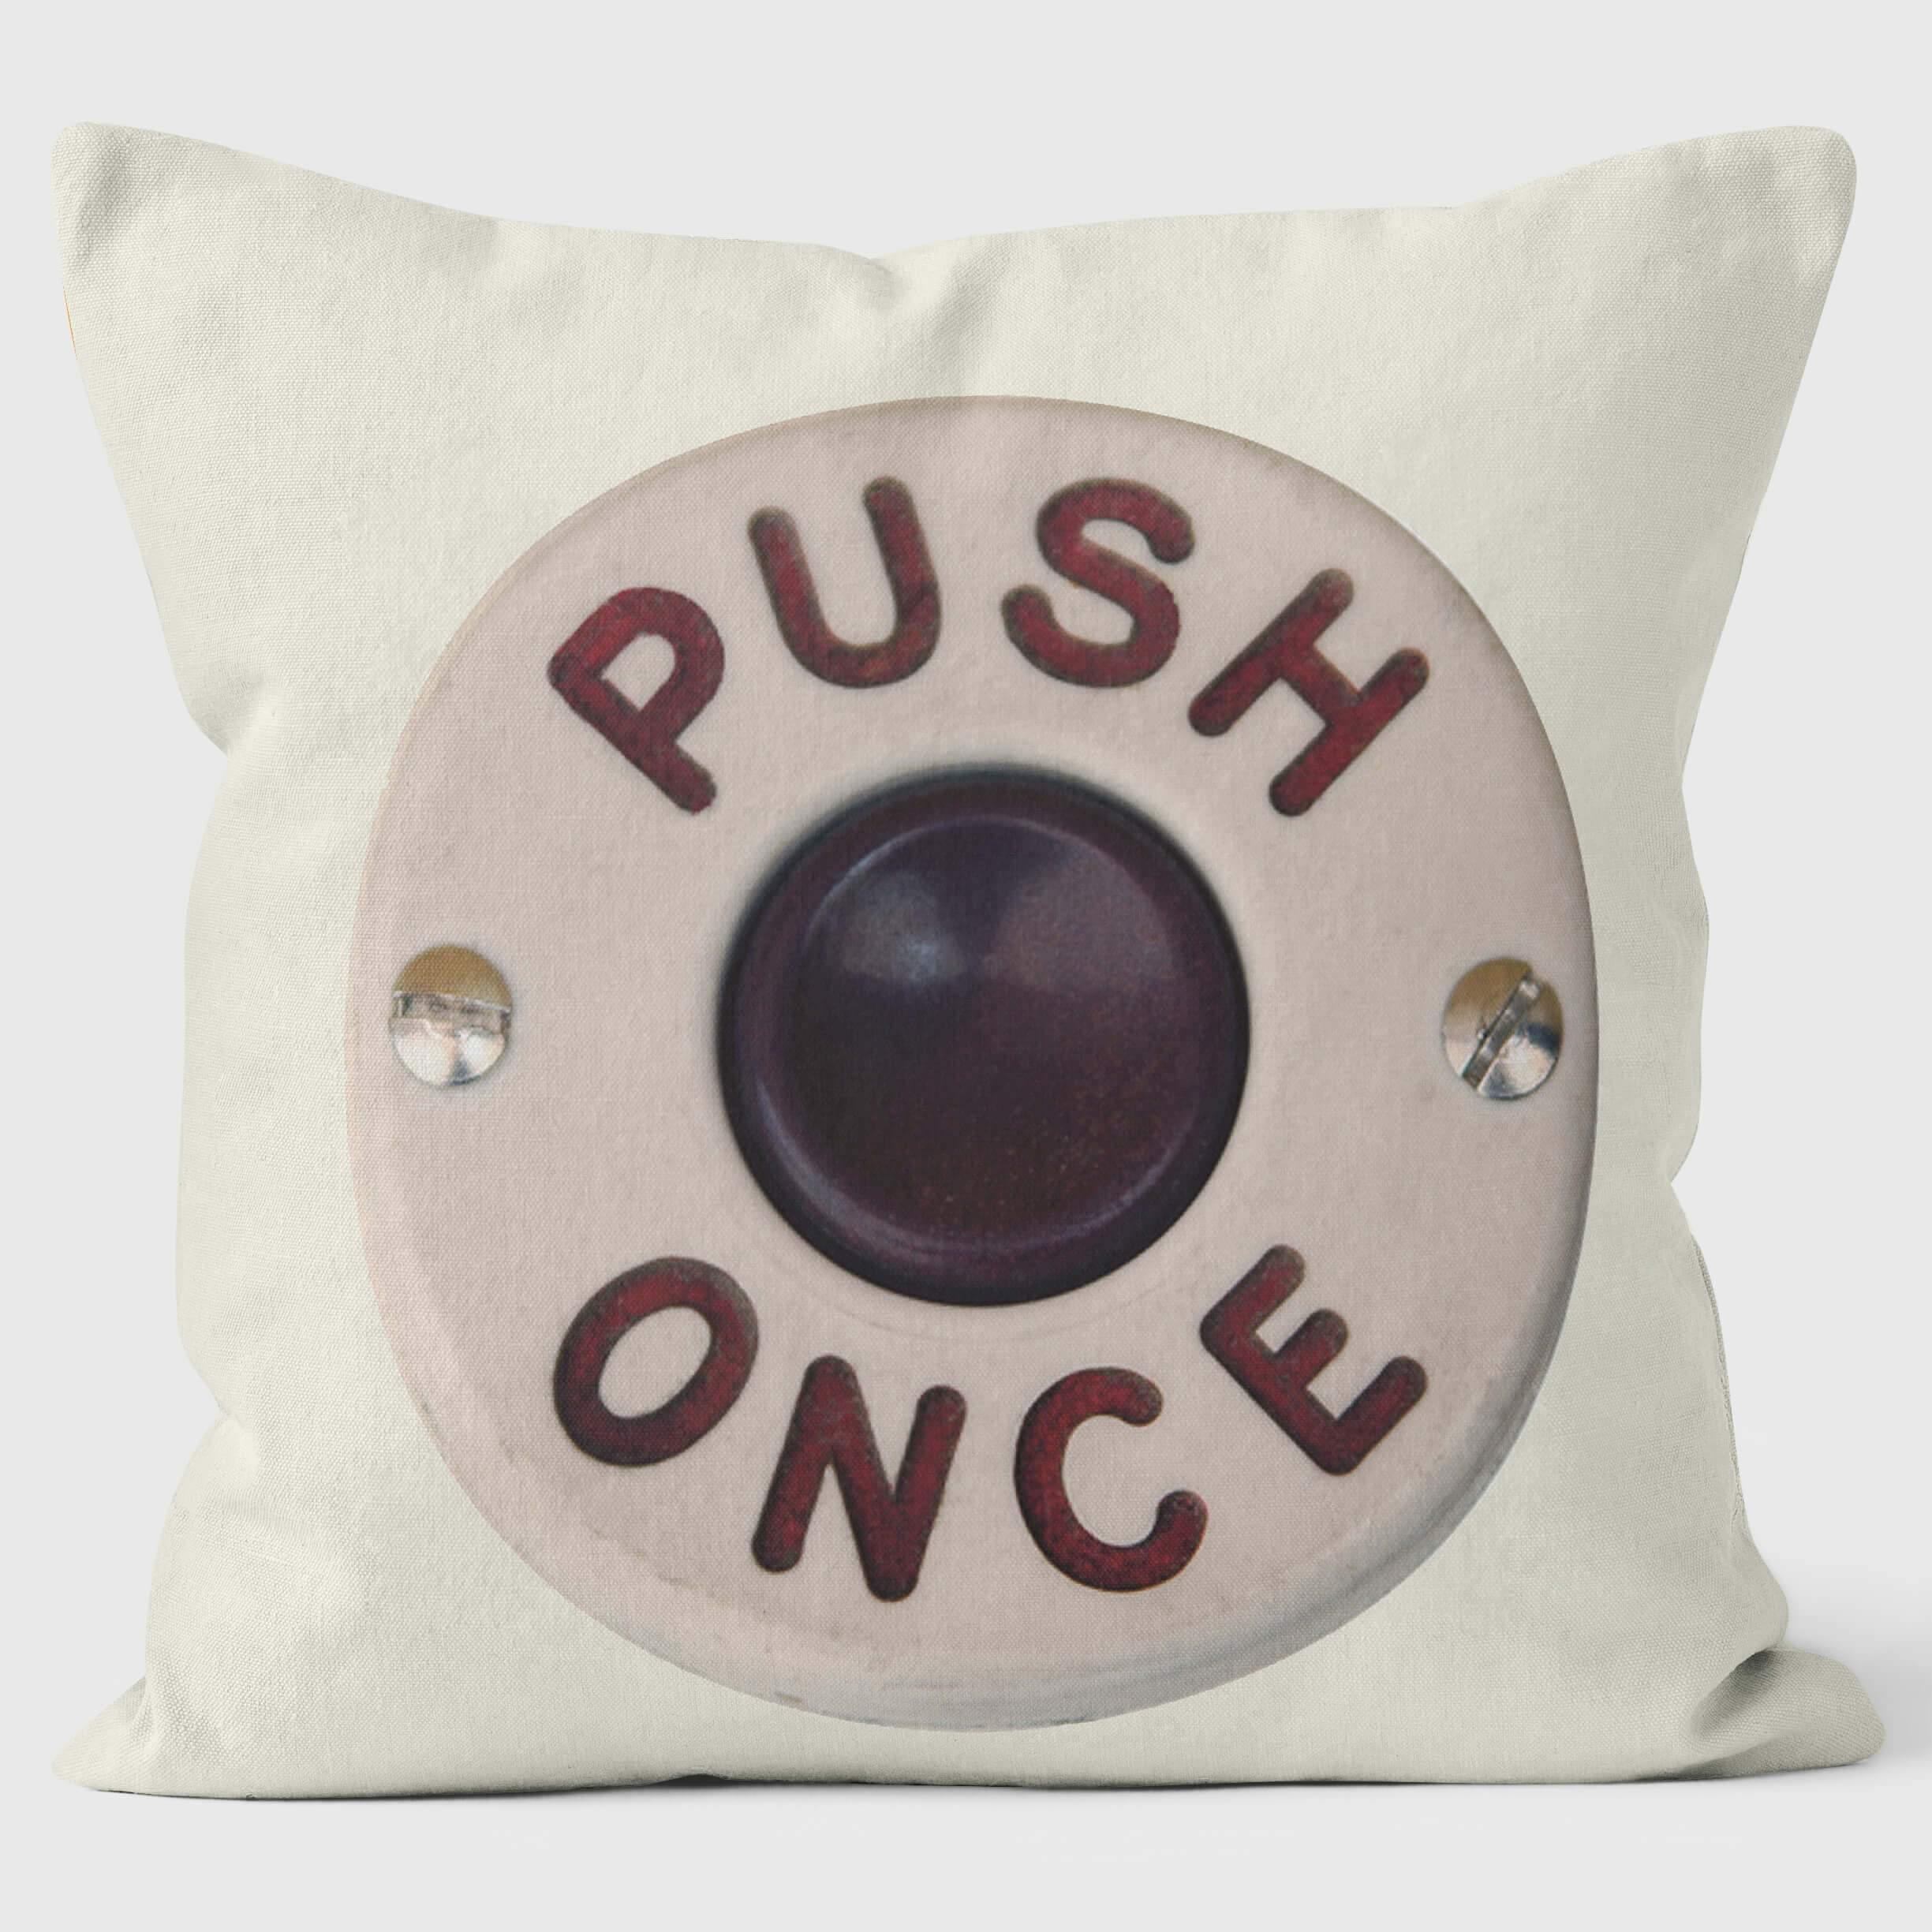 Push The Button - Art Print Cushion - Handmade Cushions UK - WeLoveCushions